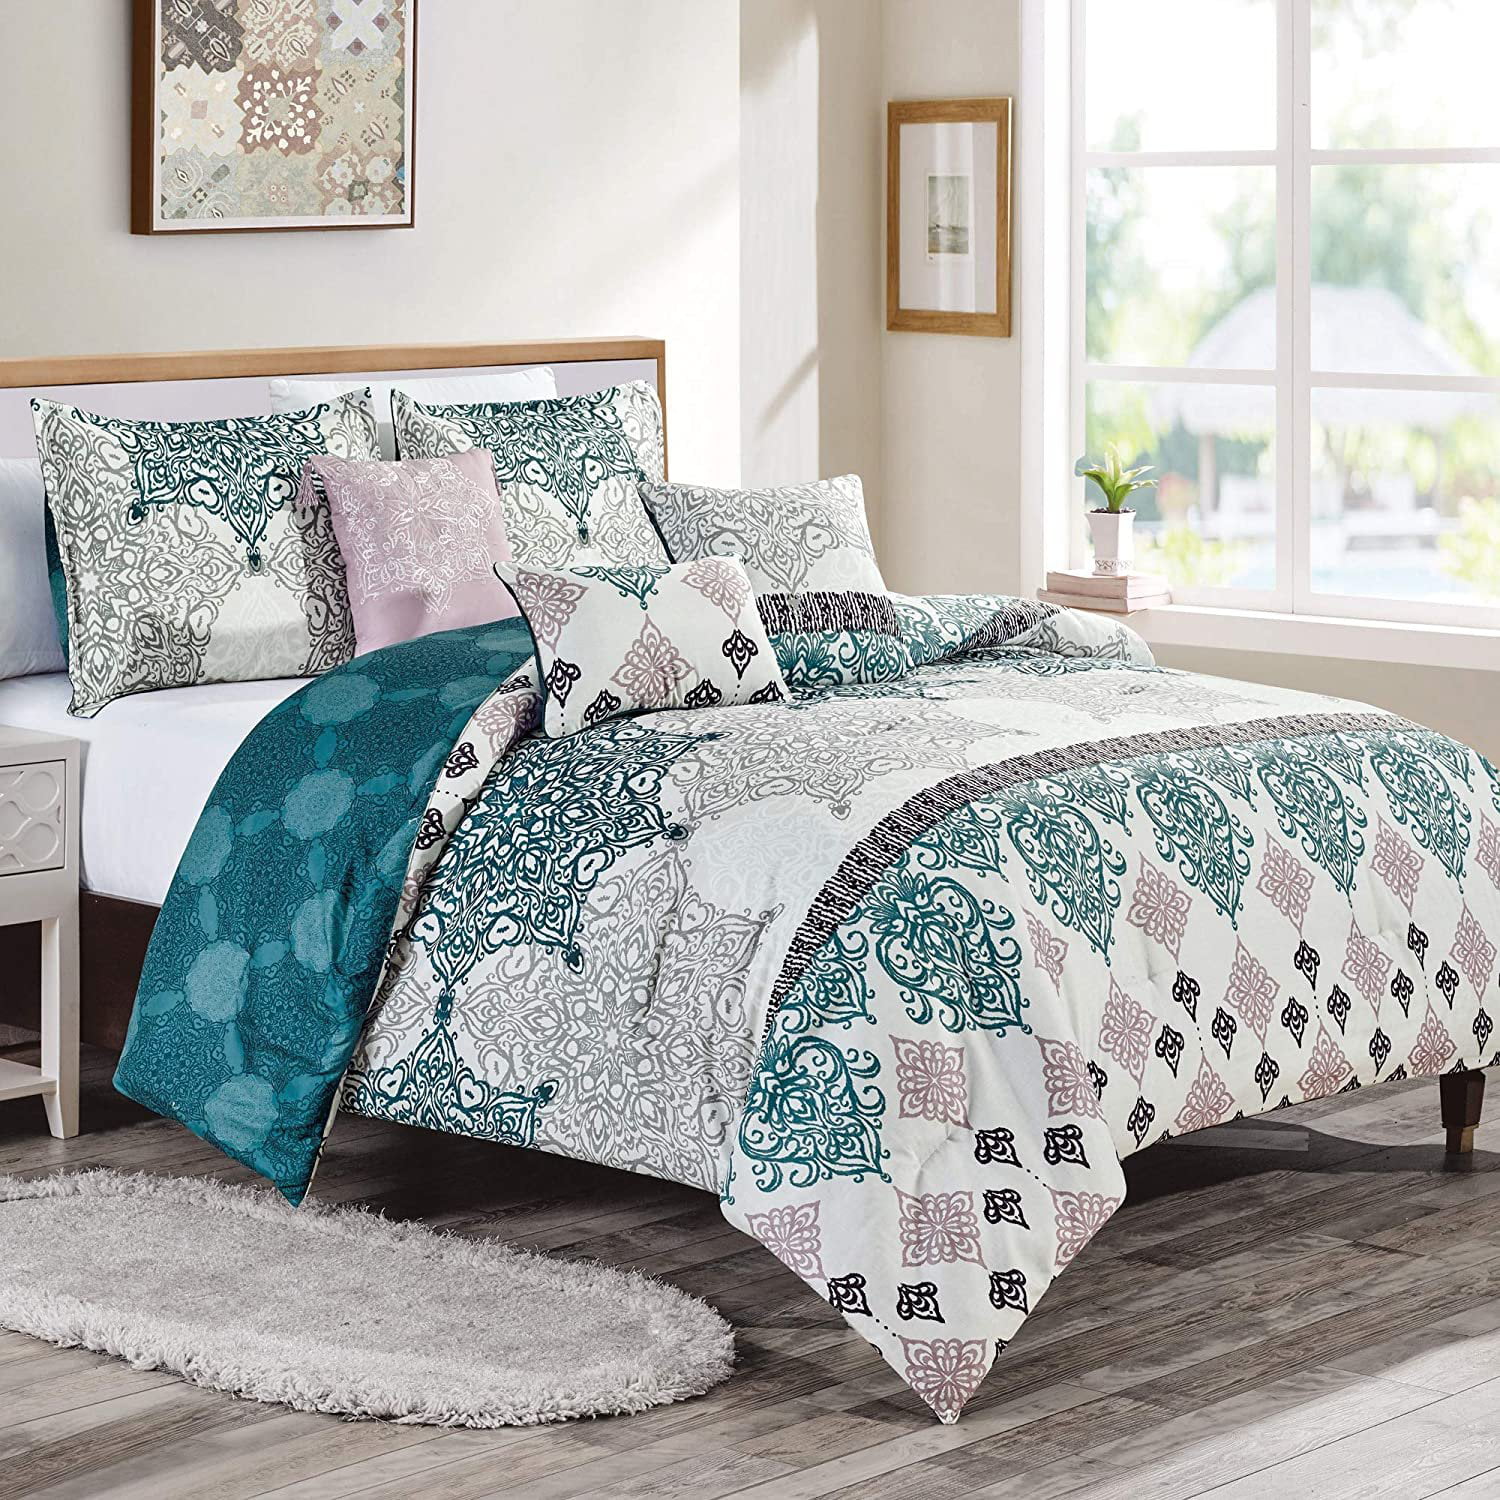 6 Piece Comforter Set Damask Pattern Cotton Bedding Bedroom Linen King Size New